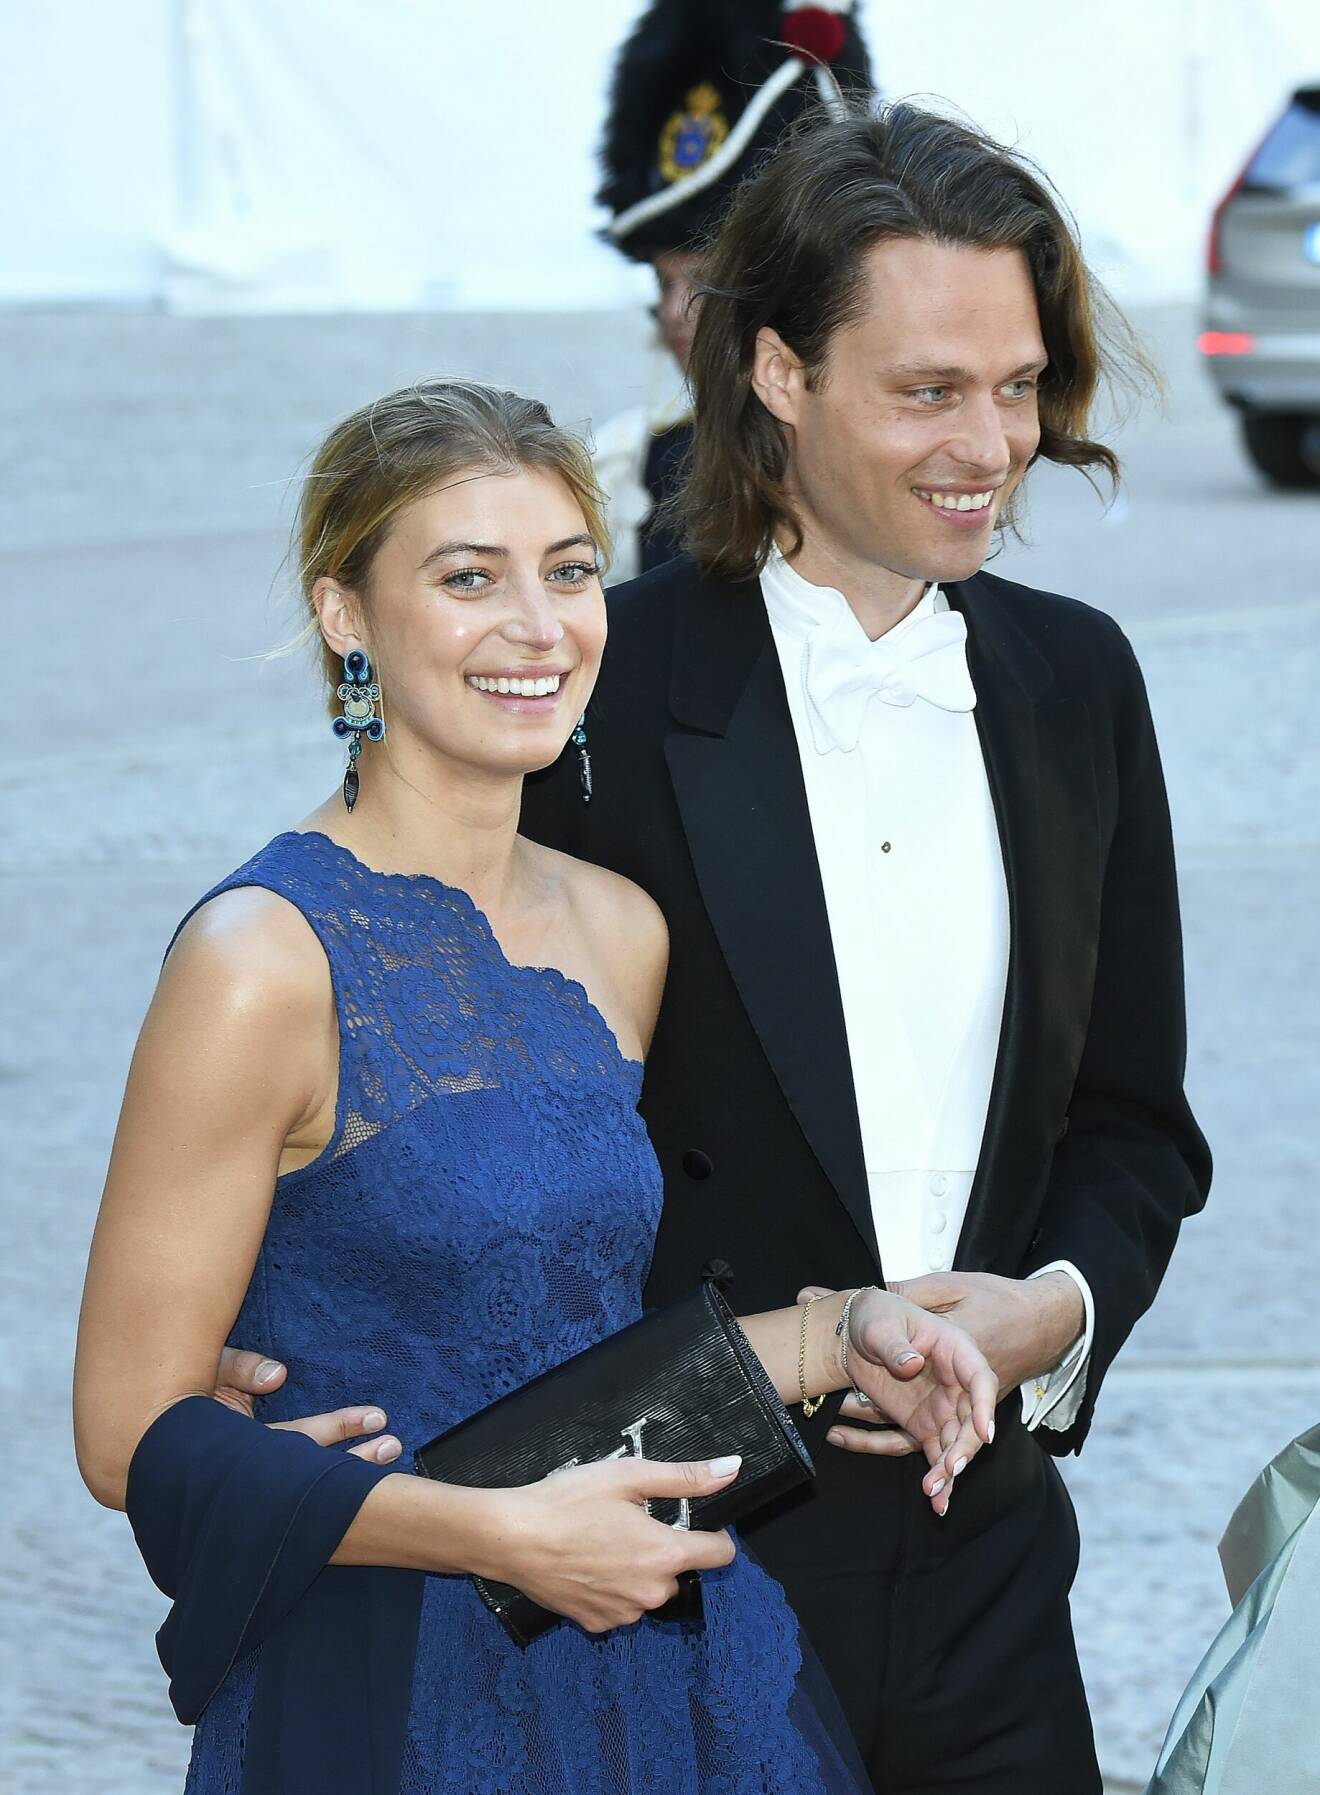 Cecilia dåvarande pojkvännen Fredrik vid prins Carl Philips and Sofia Hellqvists bröllop i Stockholm år 2015.